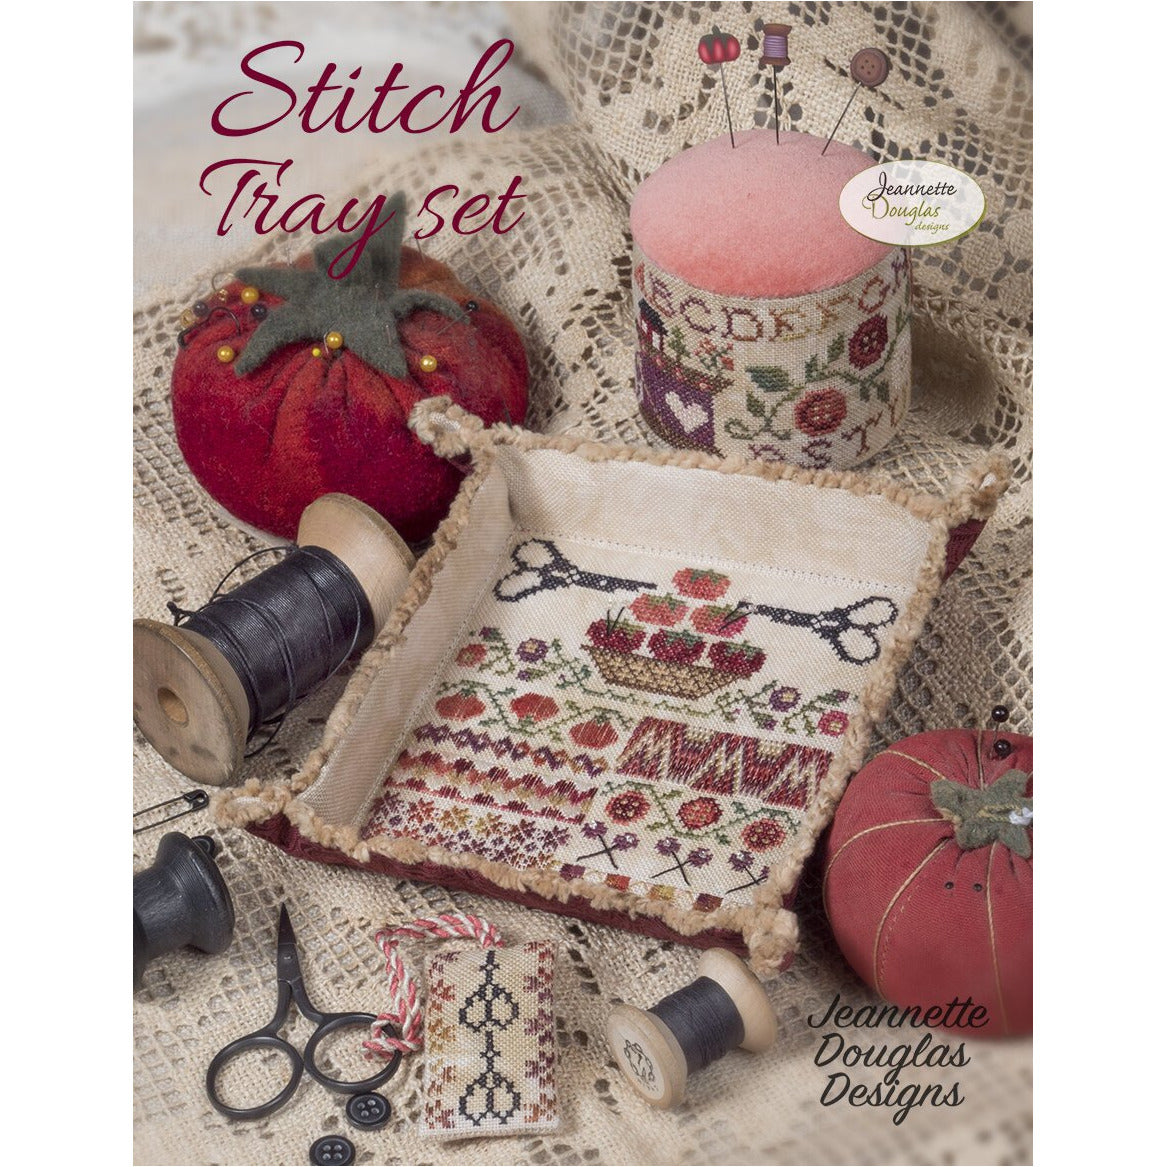 Jeannette Douglas Designs | Stitch Tray Set Pattern